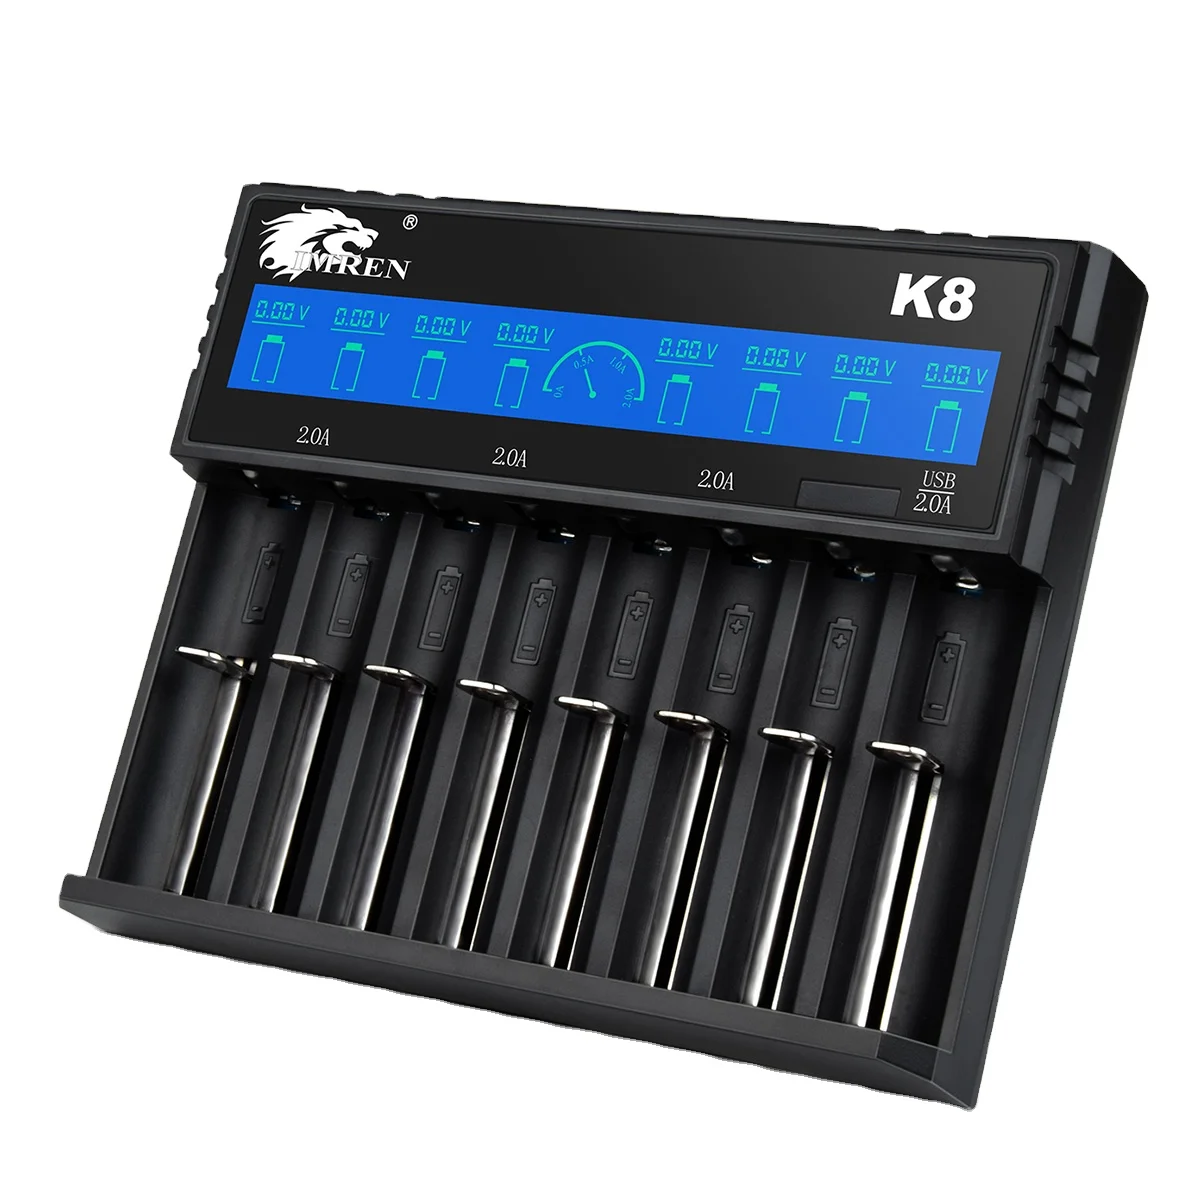 

IMREN k8 high voltage for mechanical battery charger with charger 8 slots 5v/2A 5v/1A 18650 26650 20700 battery, Black